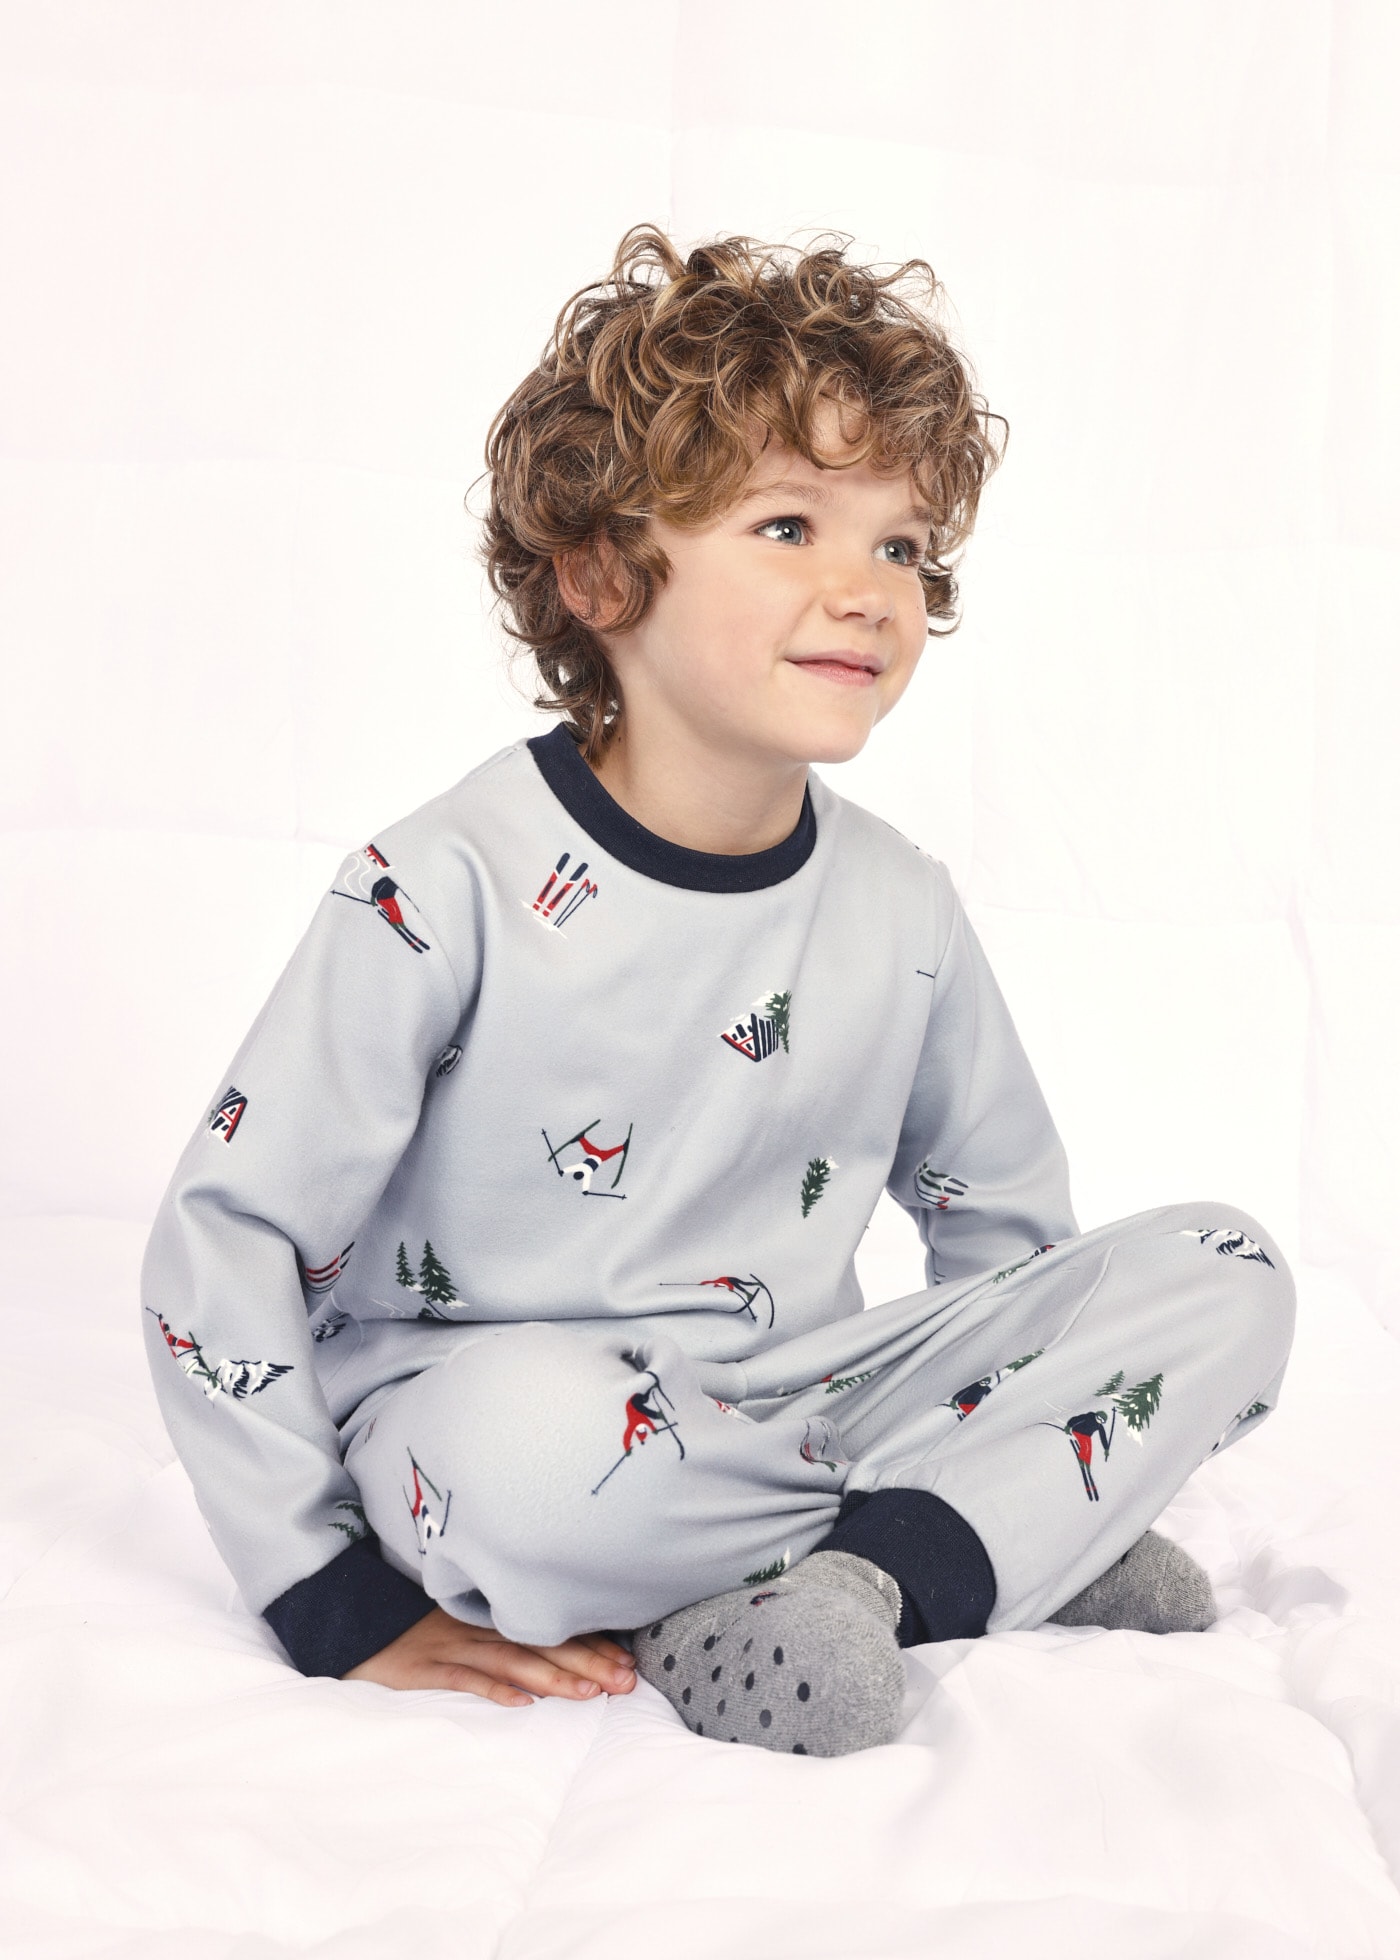 Pijamas niño juvenil con polar talla única como para 12 años